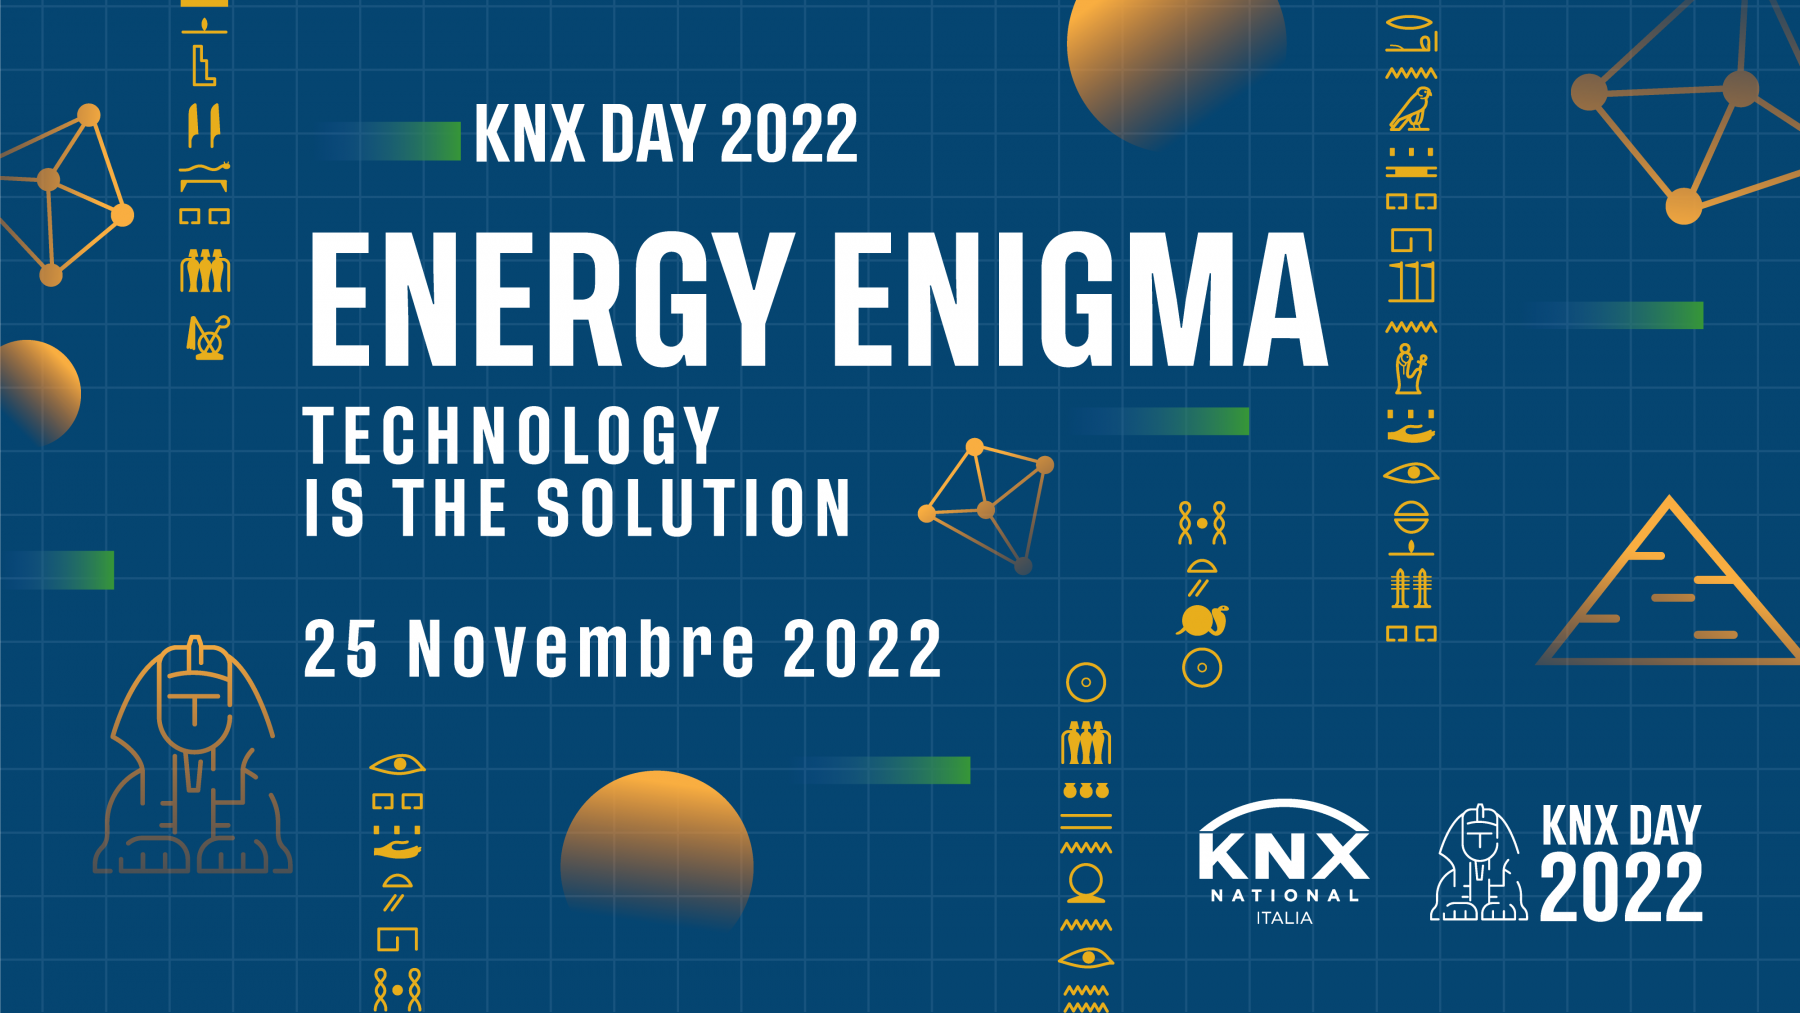 KNX DAY 2022